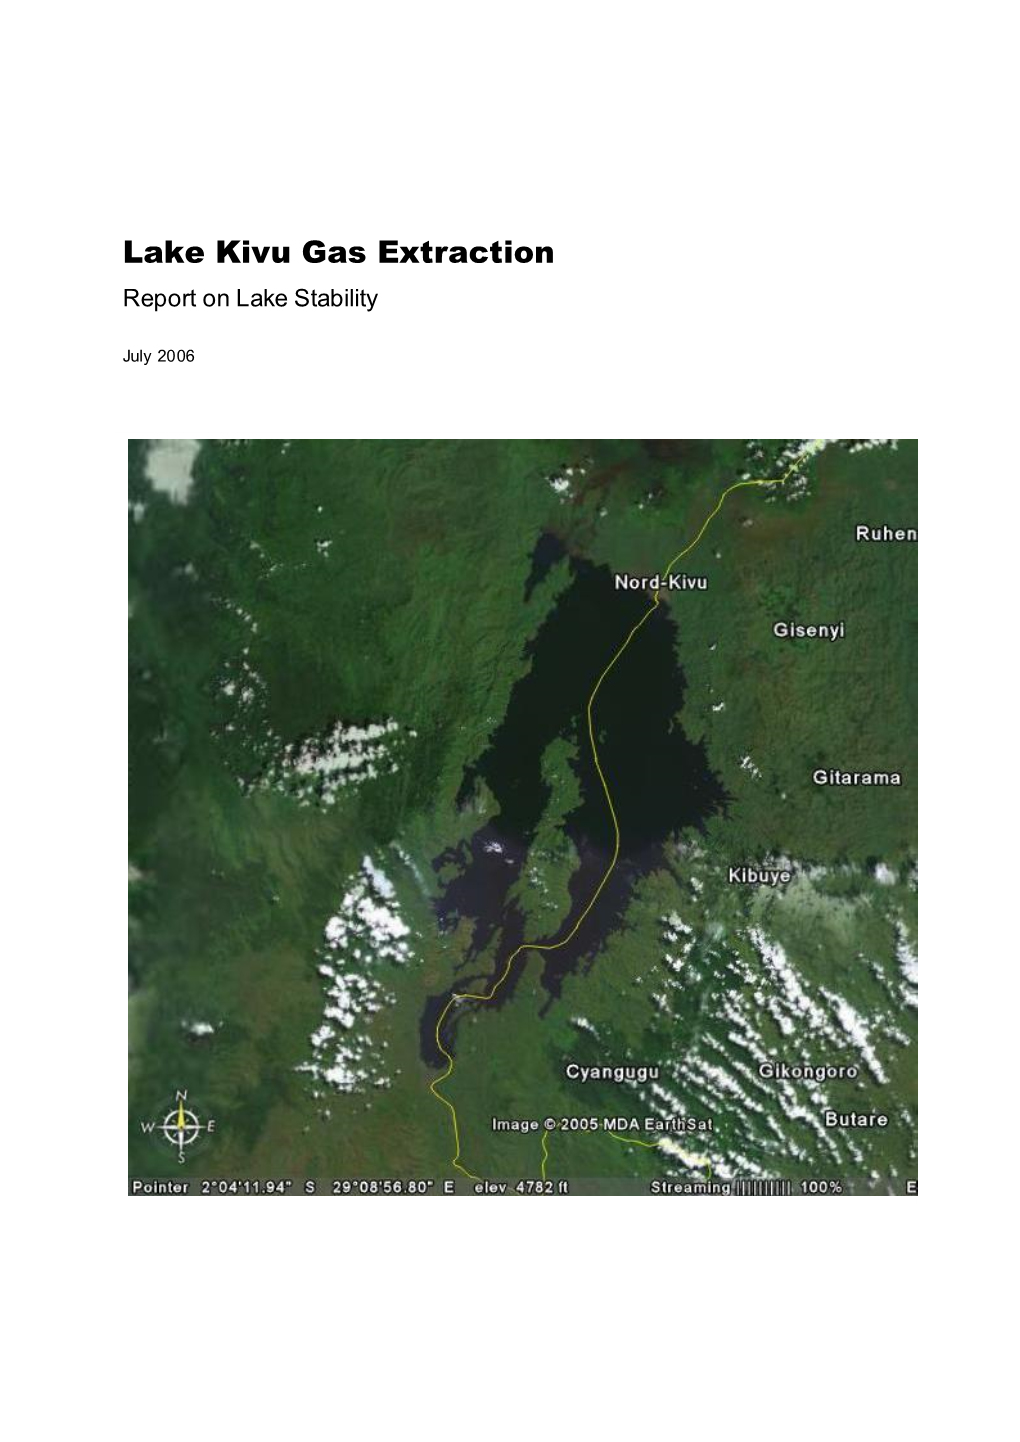 Lake Kivu Gas Extraction Report on Lake Stability